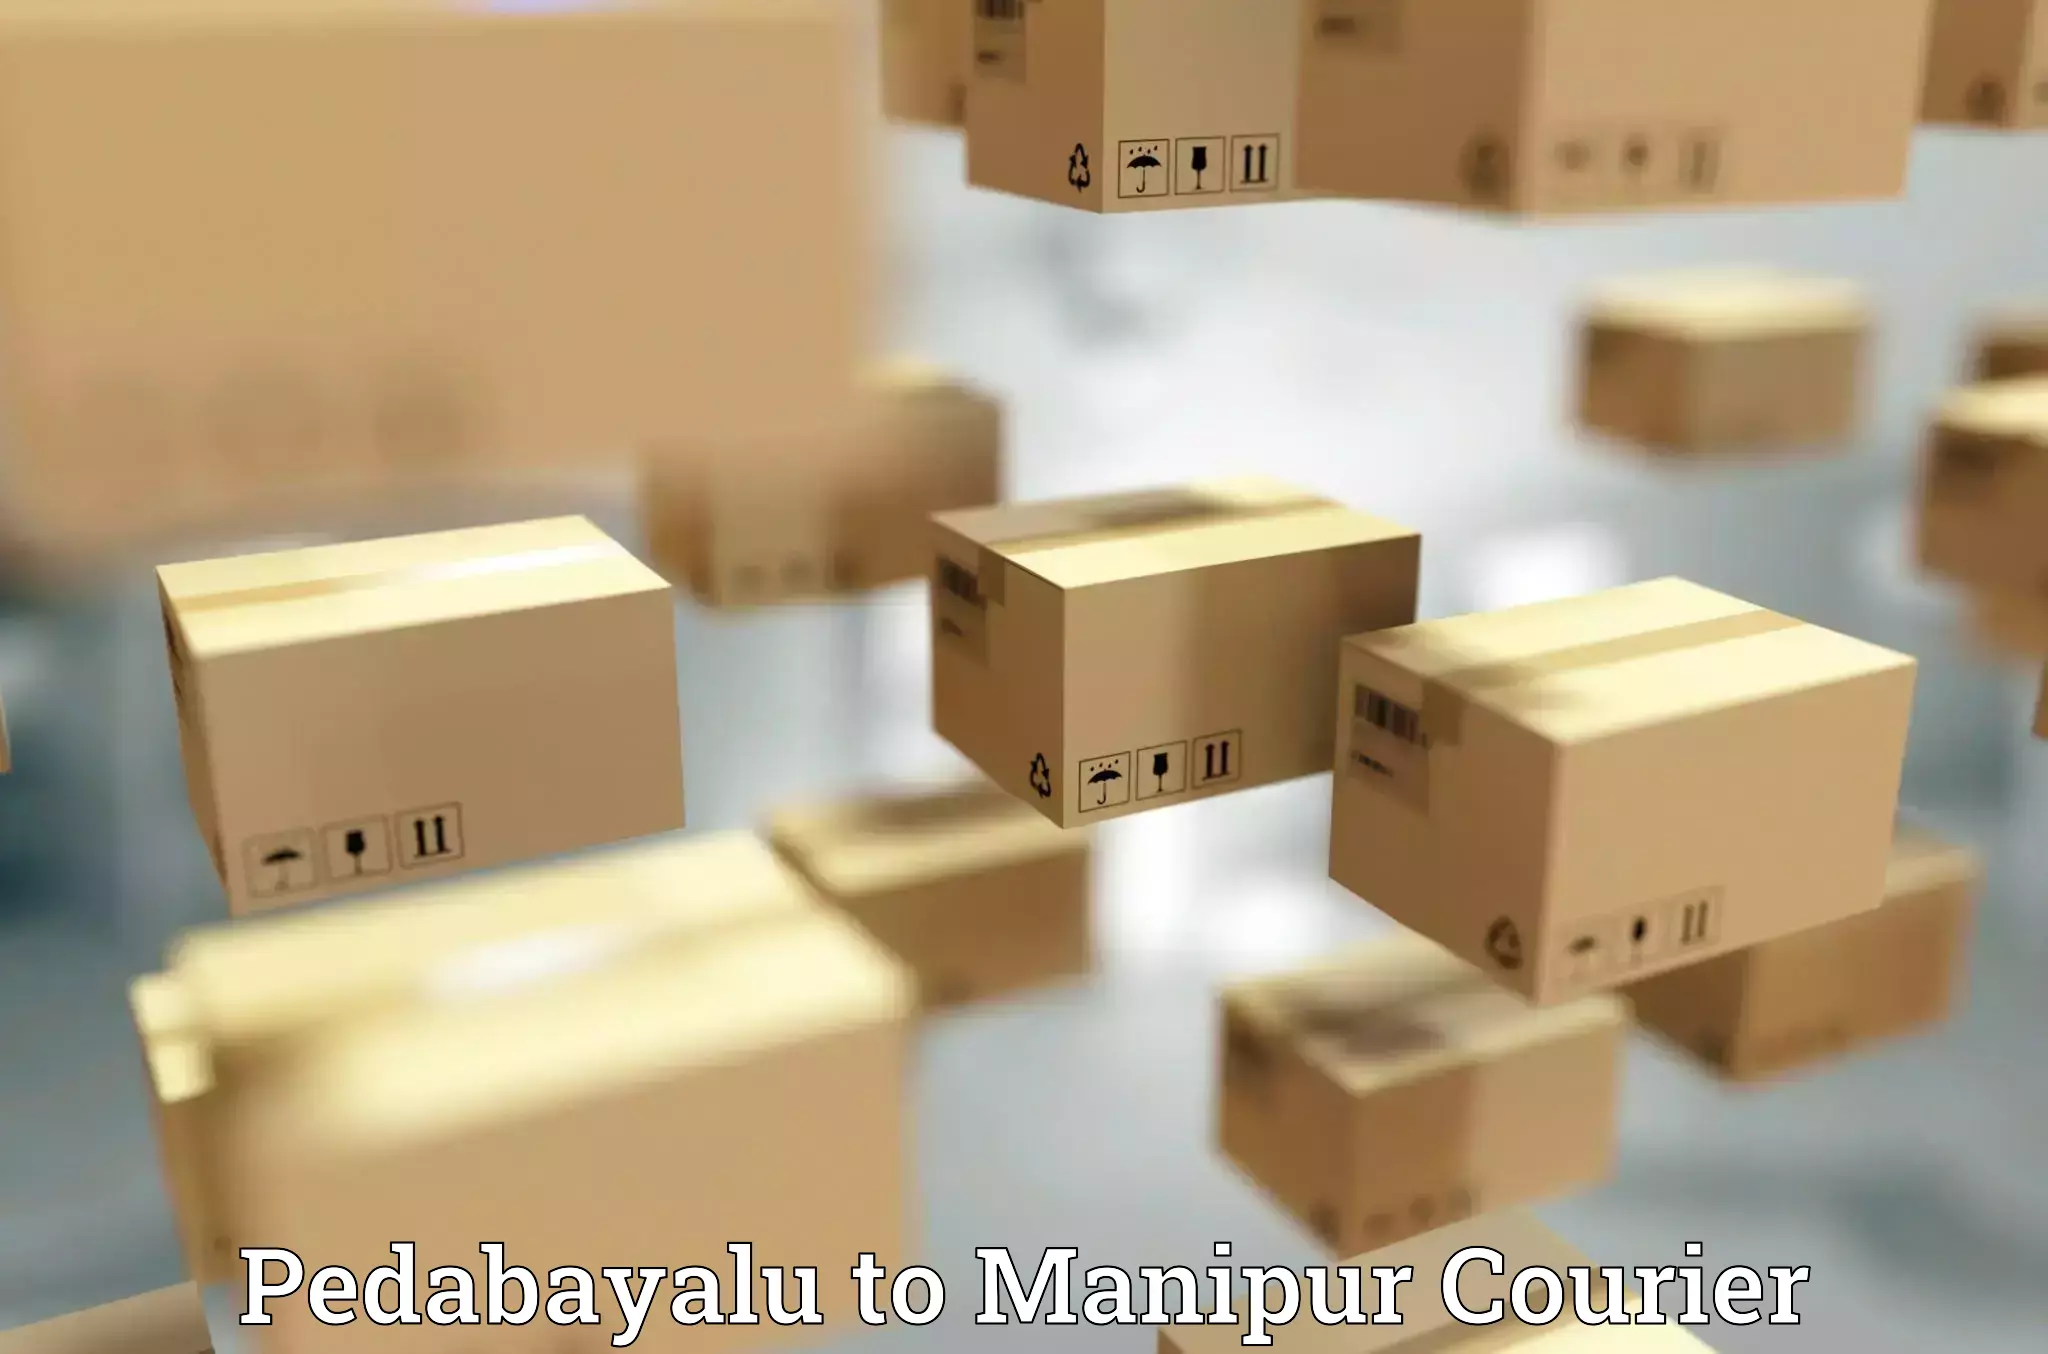 Logistics service provider Pedabayalu to Manipur